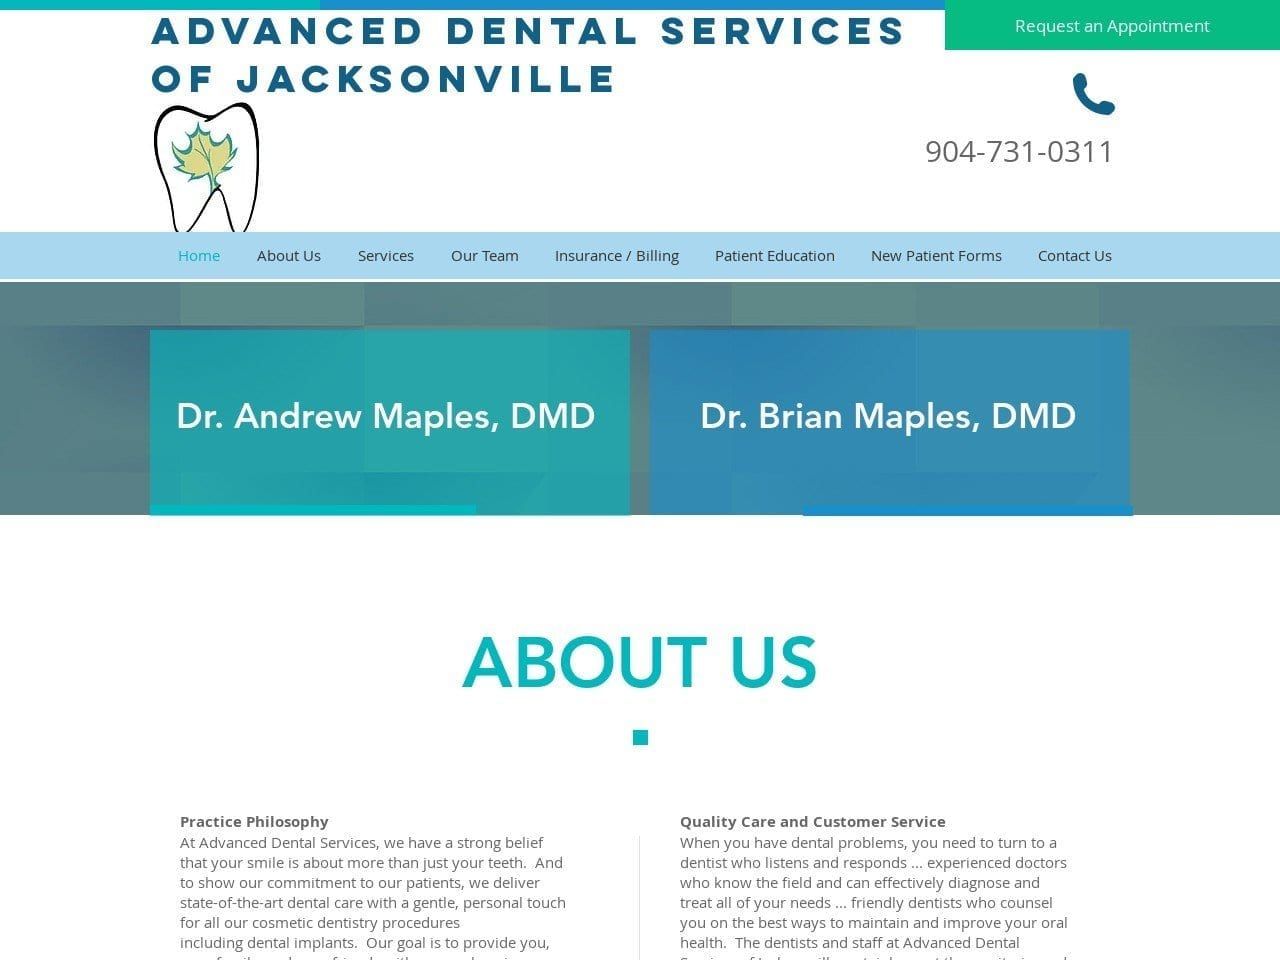 Advanced Dental Services of Jacksonville Website Screenshot from advanceddentaljax.com